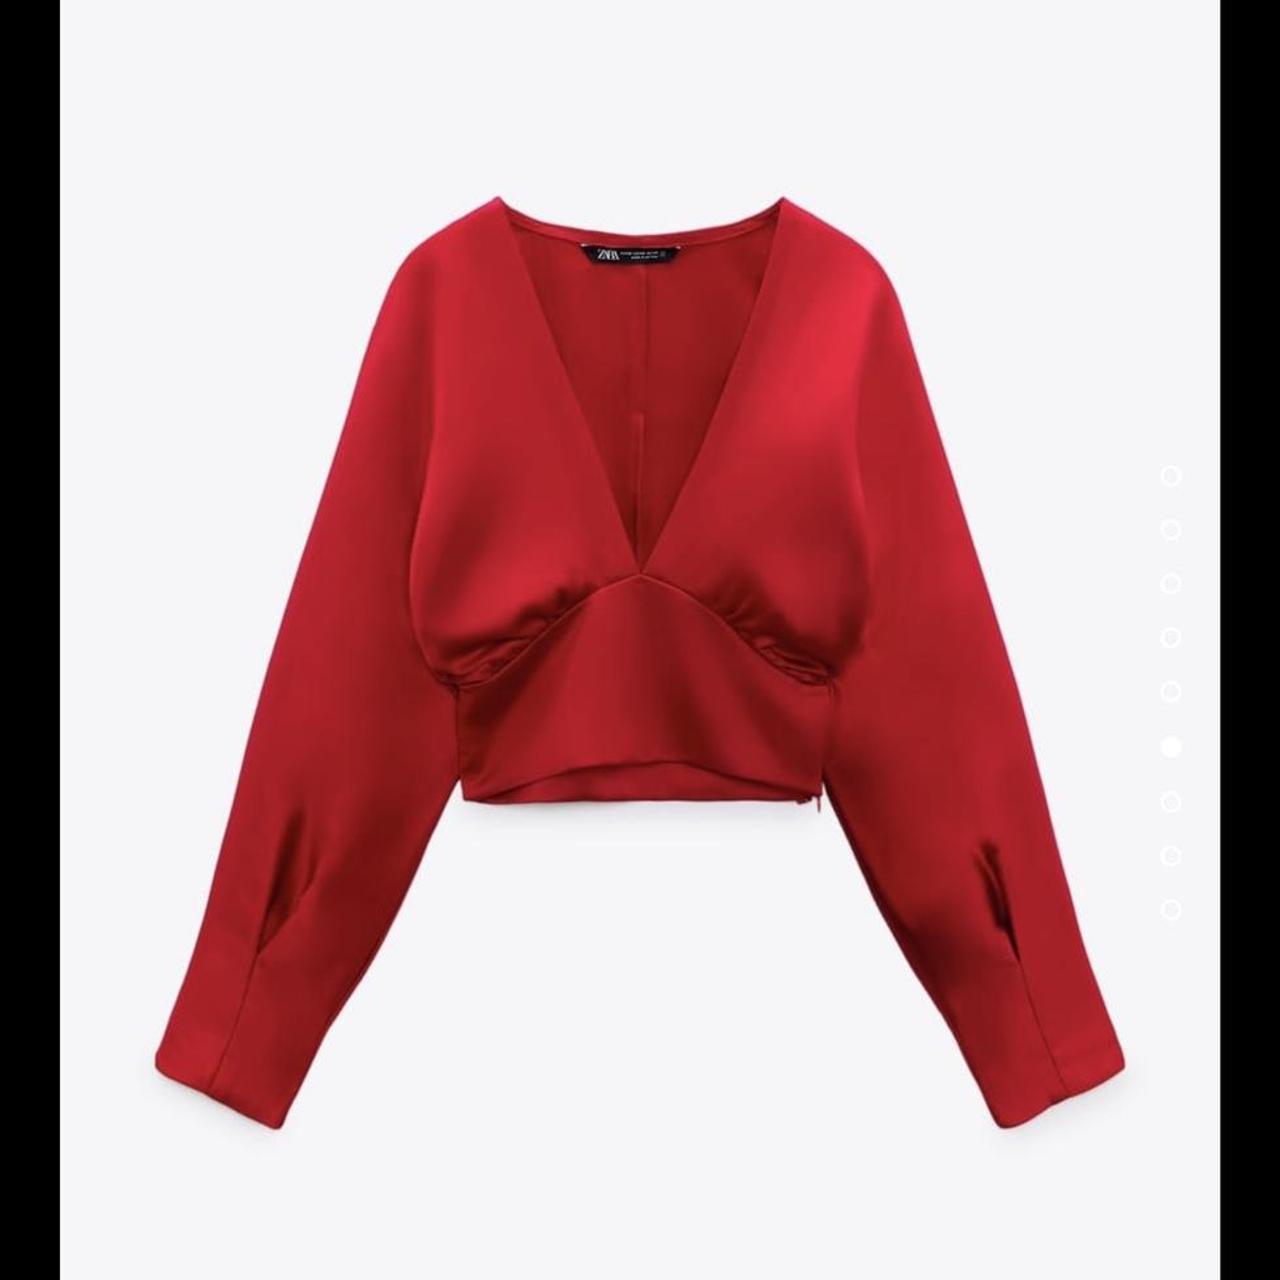 Gorgeous Satin Red Zara Blouse Top Cropped Size... - Depop